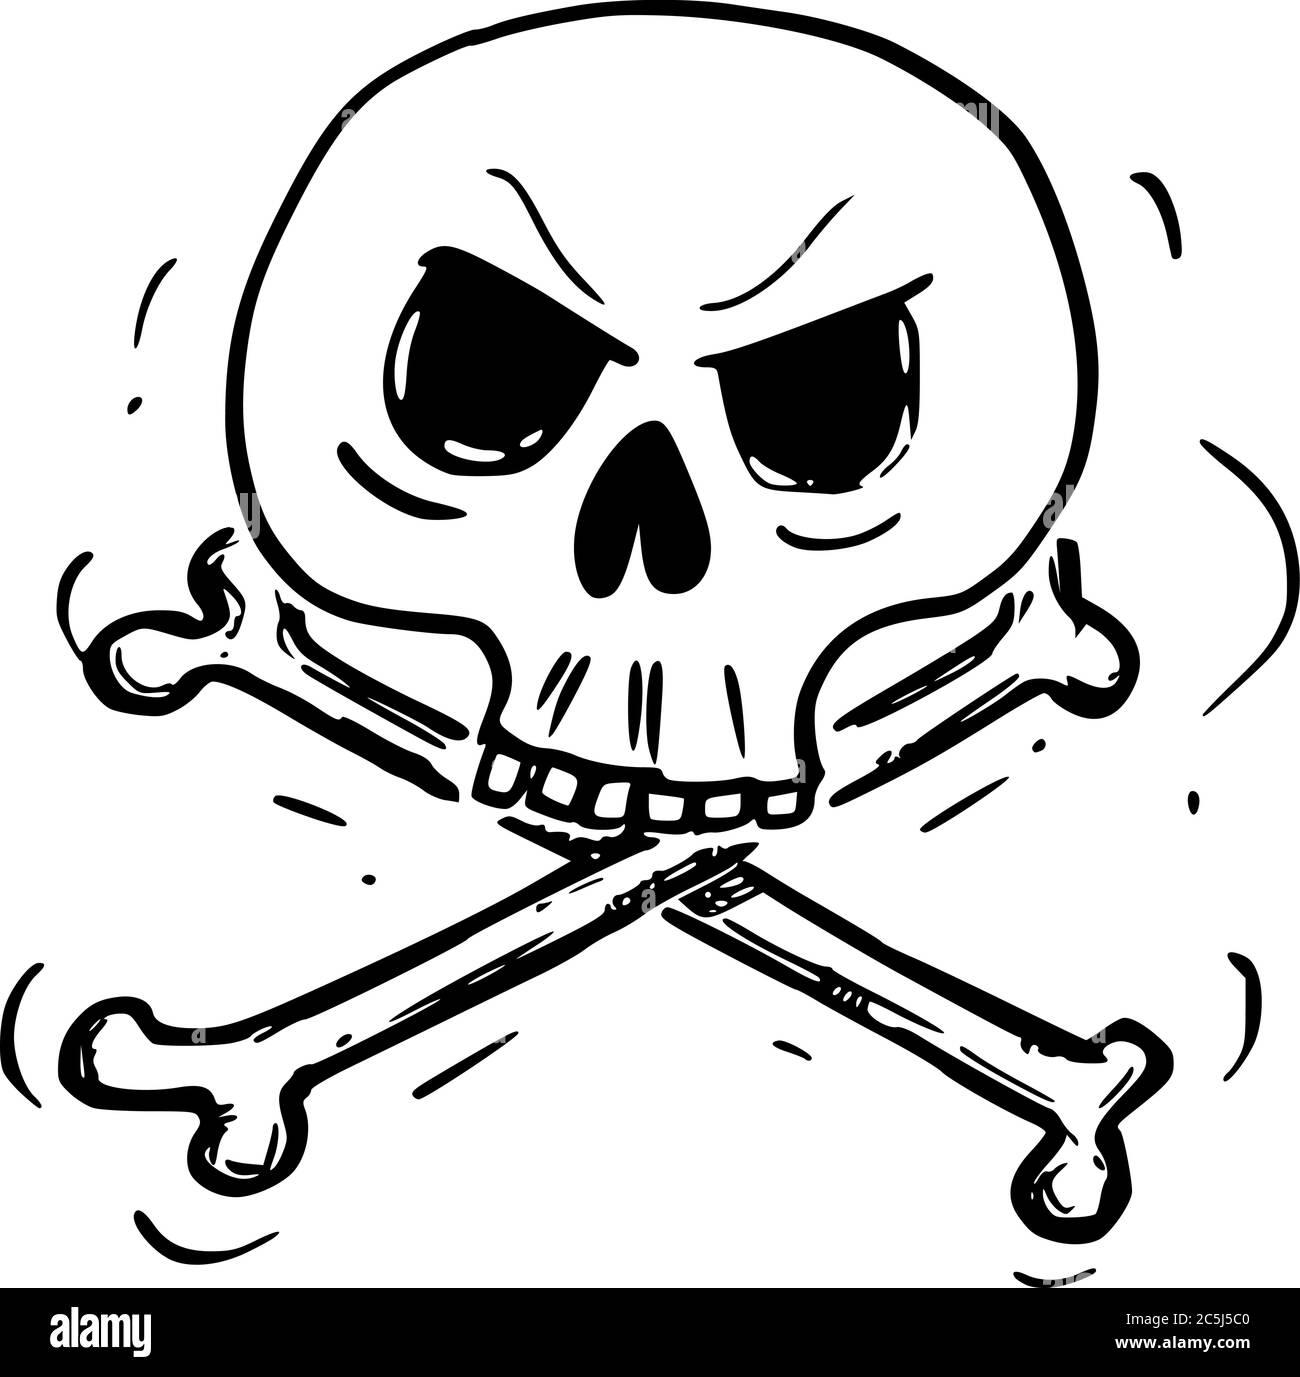 Vector cartoon drawing conceptual illustration of crossbones,skull and bones warning danger poison symbol. Stock Vector